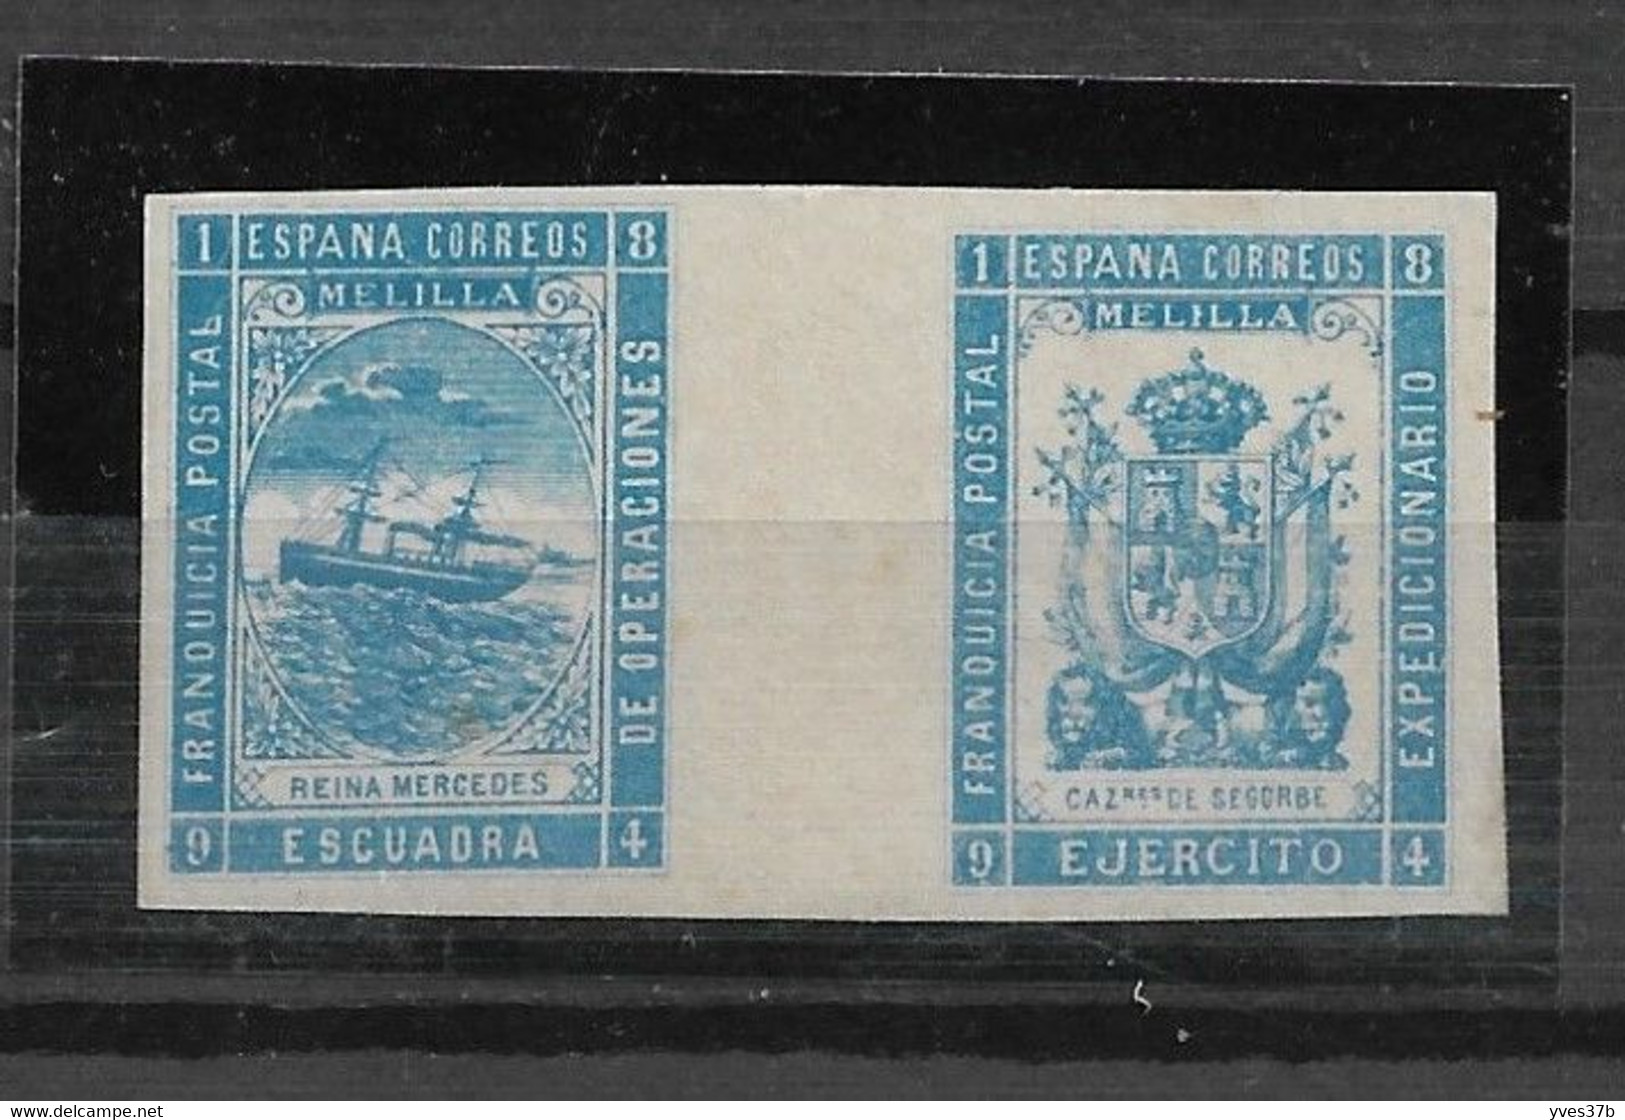 ESPAGNE - MELILLA 1894 - N°17 (Reina Mercedes) & N°27 (de Segorge) "paires Inter-panneau" - Neufs** - SUP - - Military Service Stamp